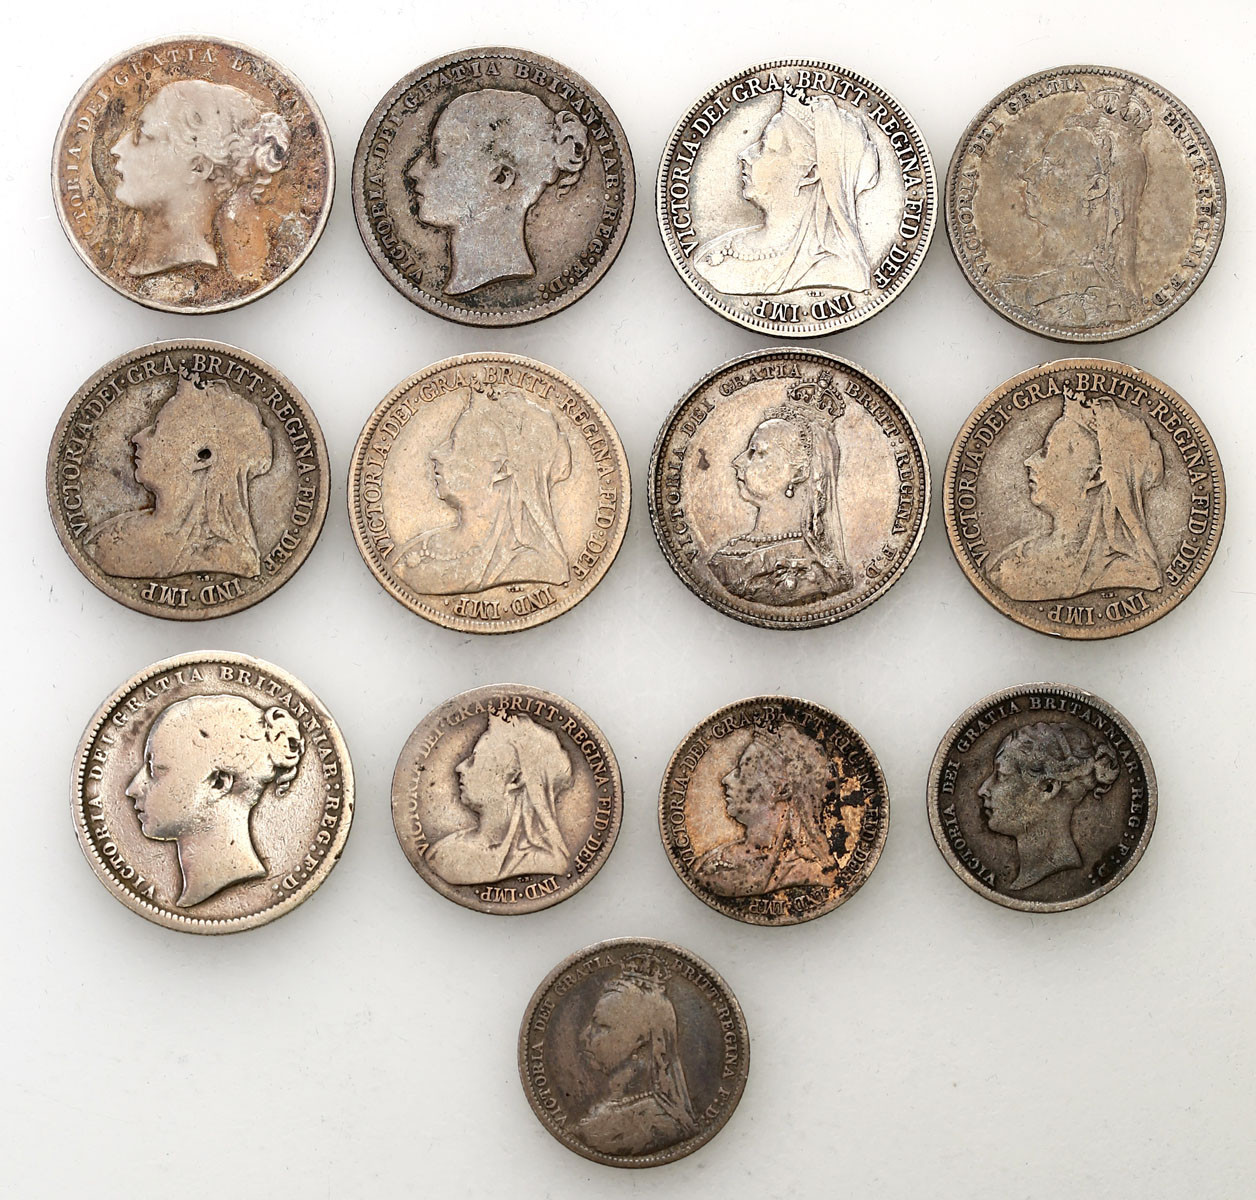 Wielka Brytania. Wiktoria (1837-1901). 6 pence, shilling 1844-1901, zestaw 13 monet